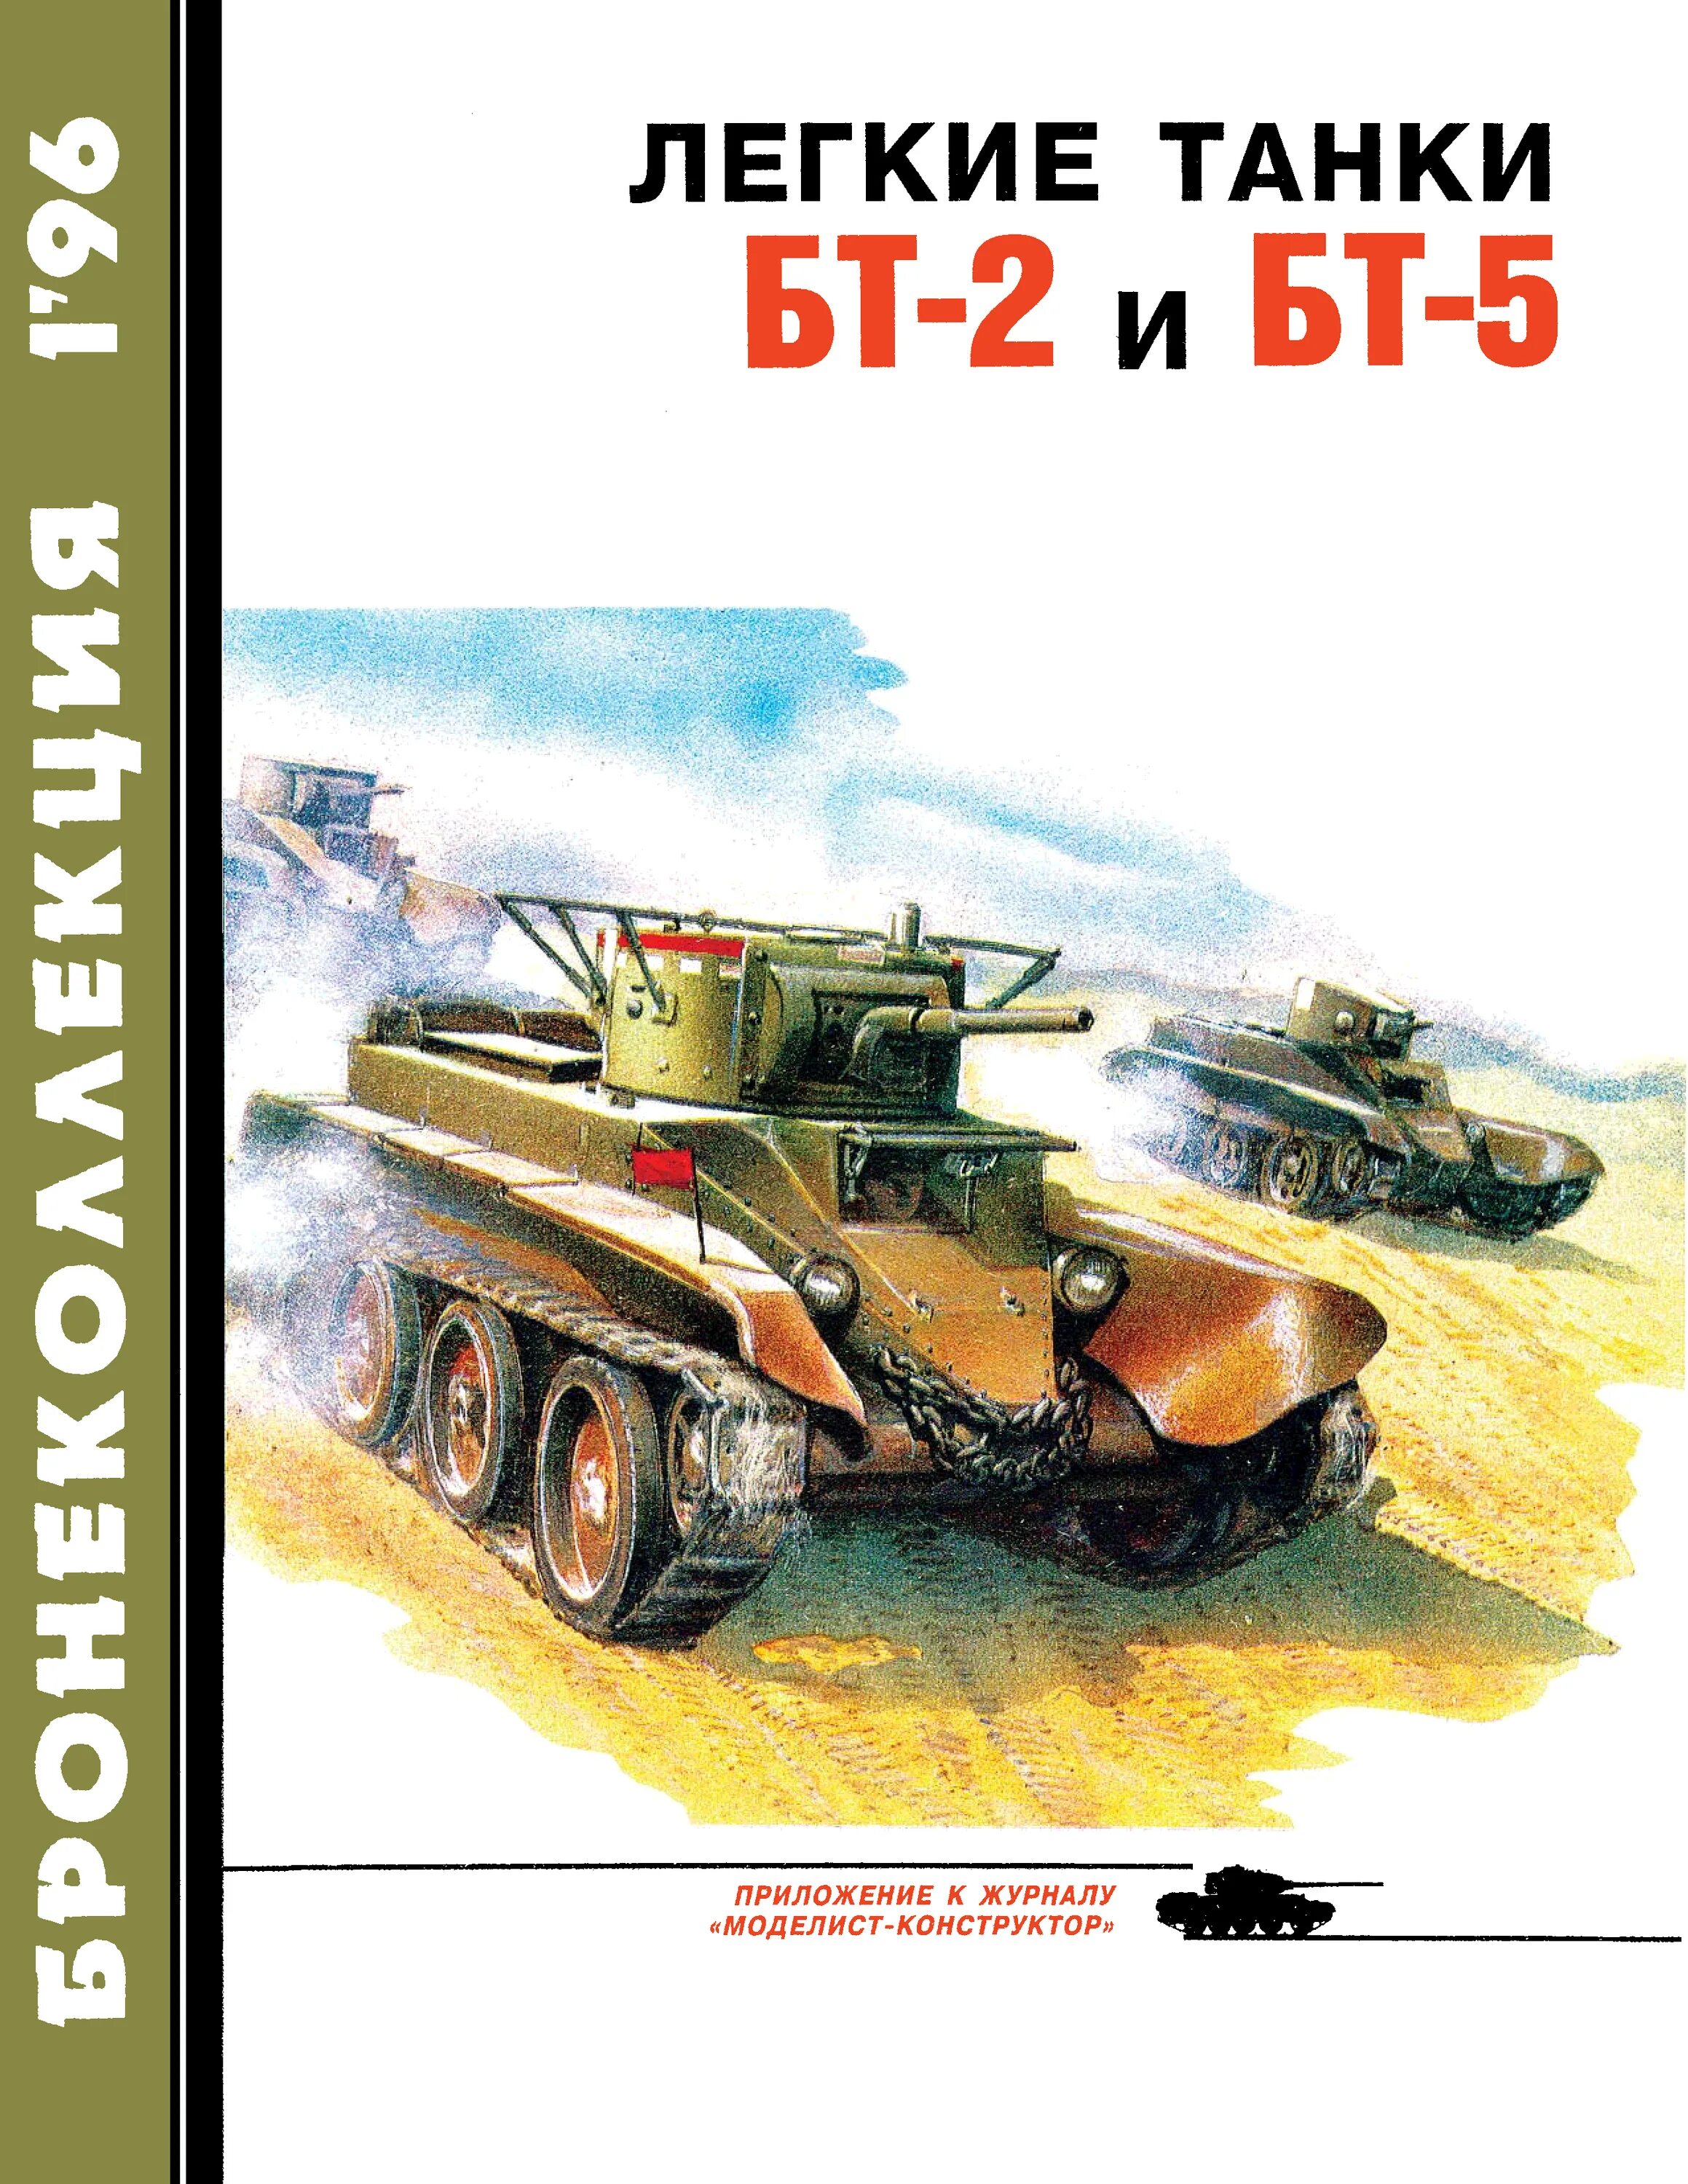 Программа бт5 на сегодня. Книга танк БТ-5. Журнал Бронеколлекция. Журнал Моделист конструктор Бронеколлекция. БТ-5 лёгкий танк.